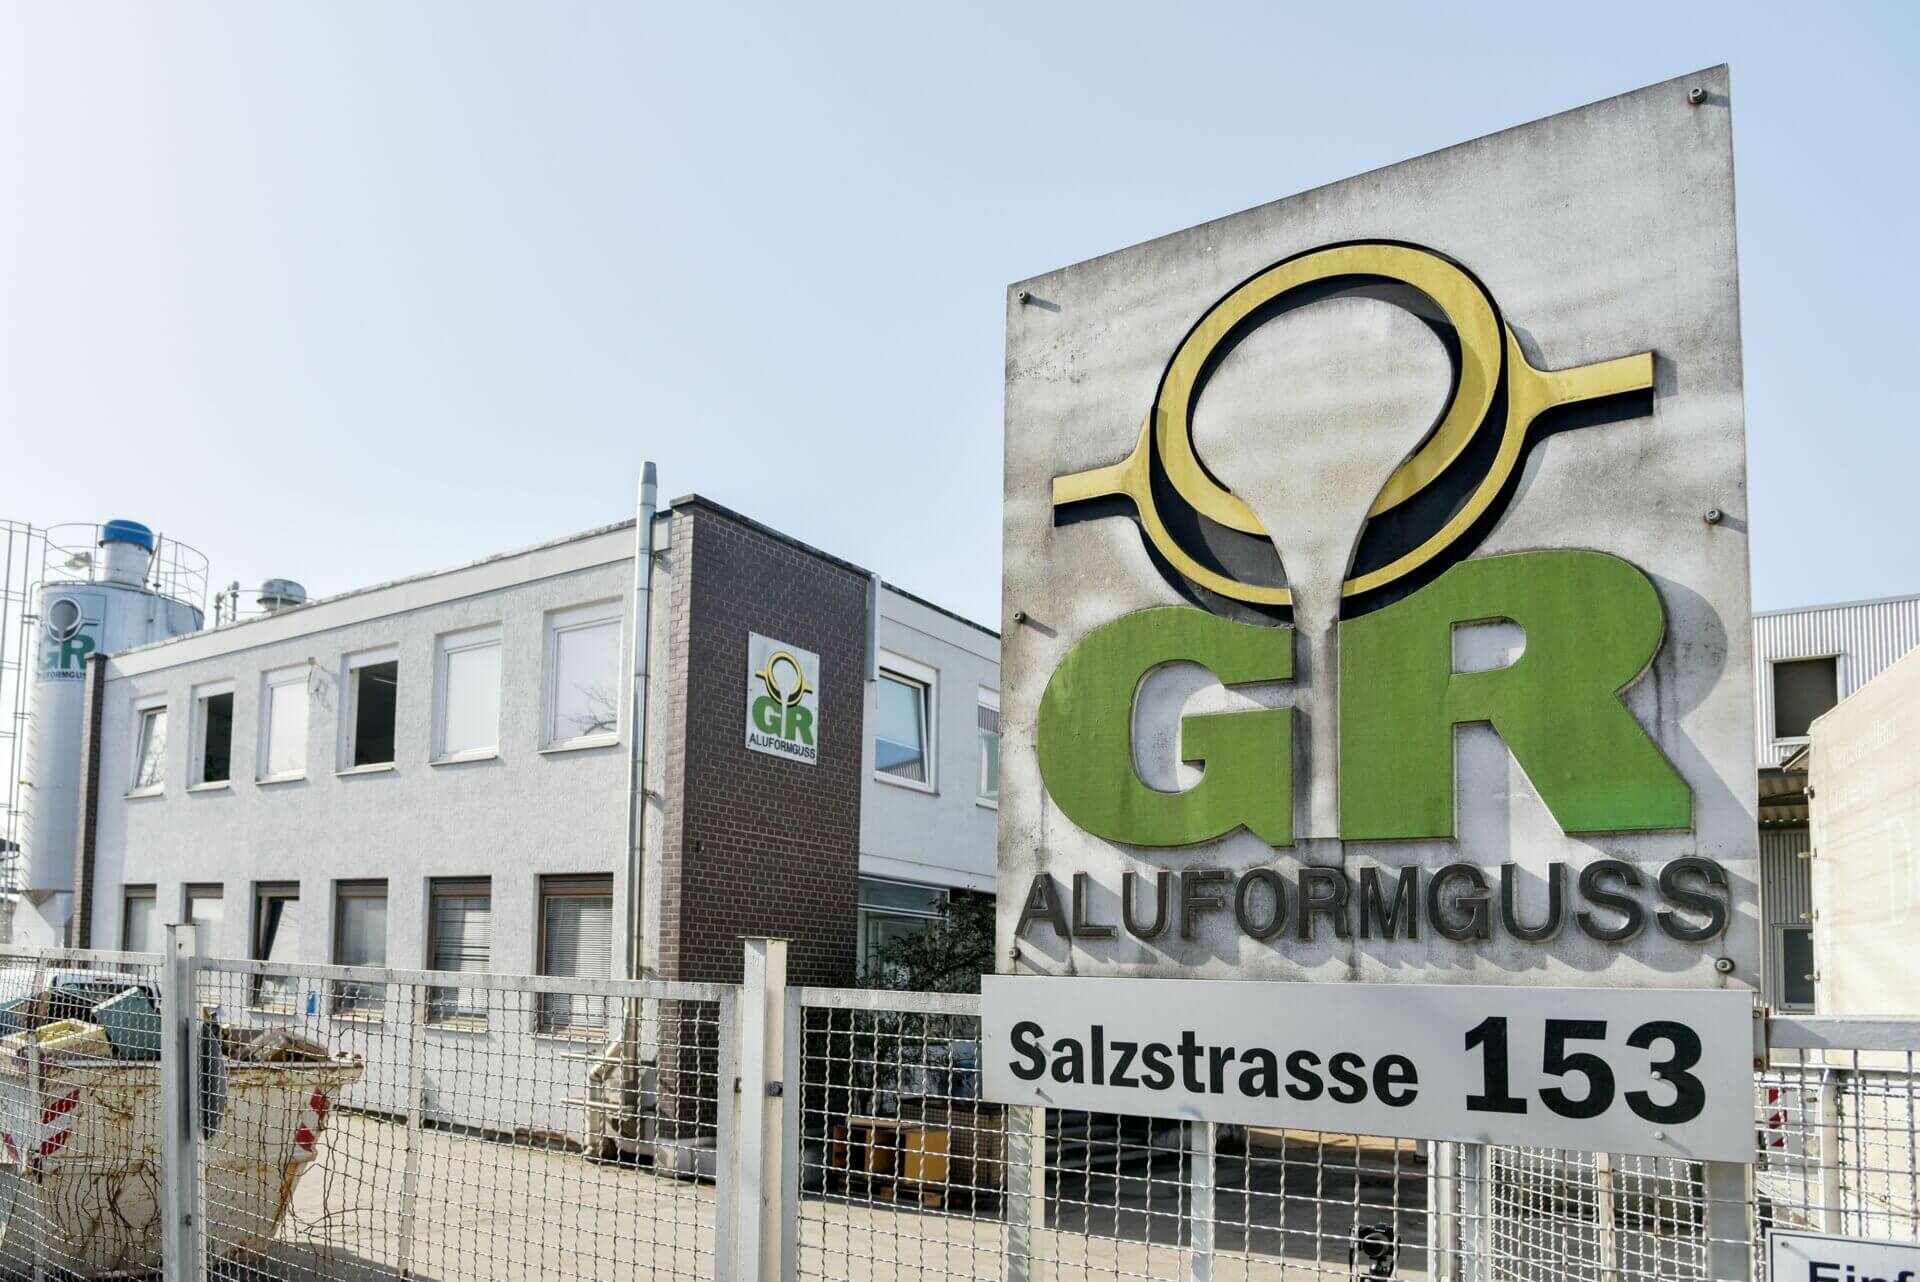 Grabert Aluformguss GmbH - Zentrale in der Salzstraße 153, 74076 Heilbronn